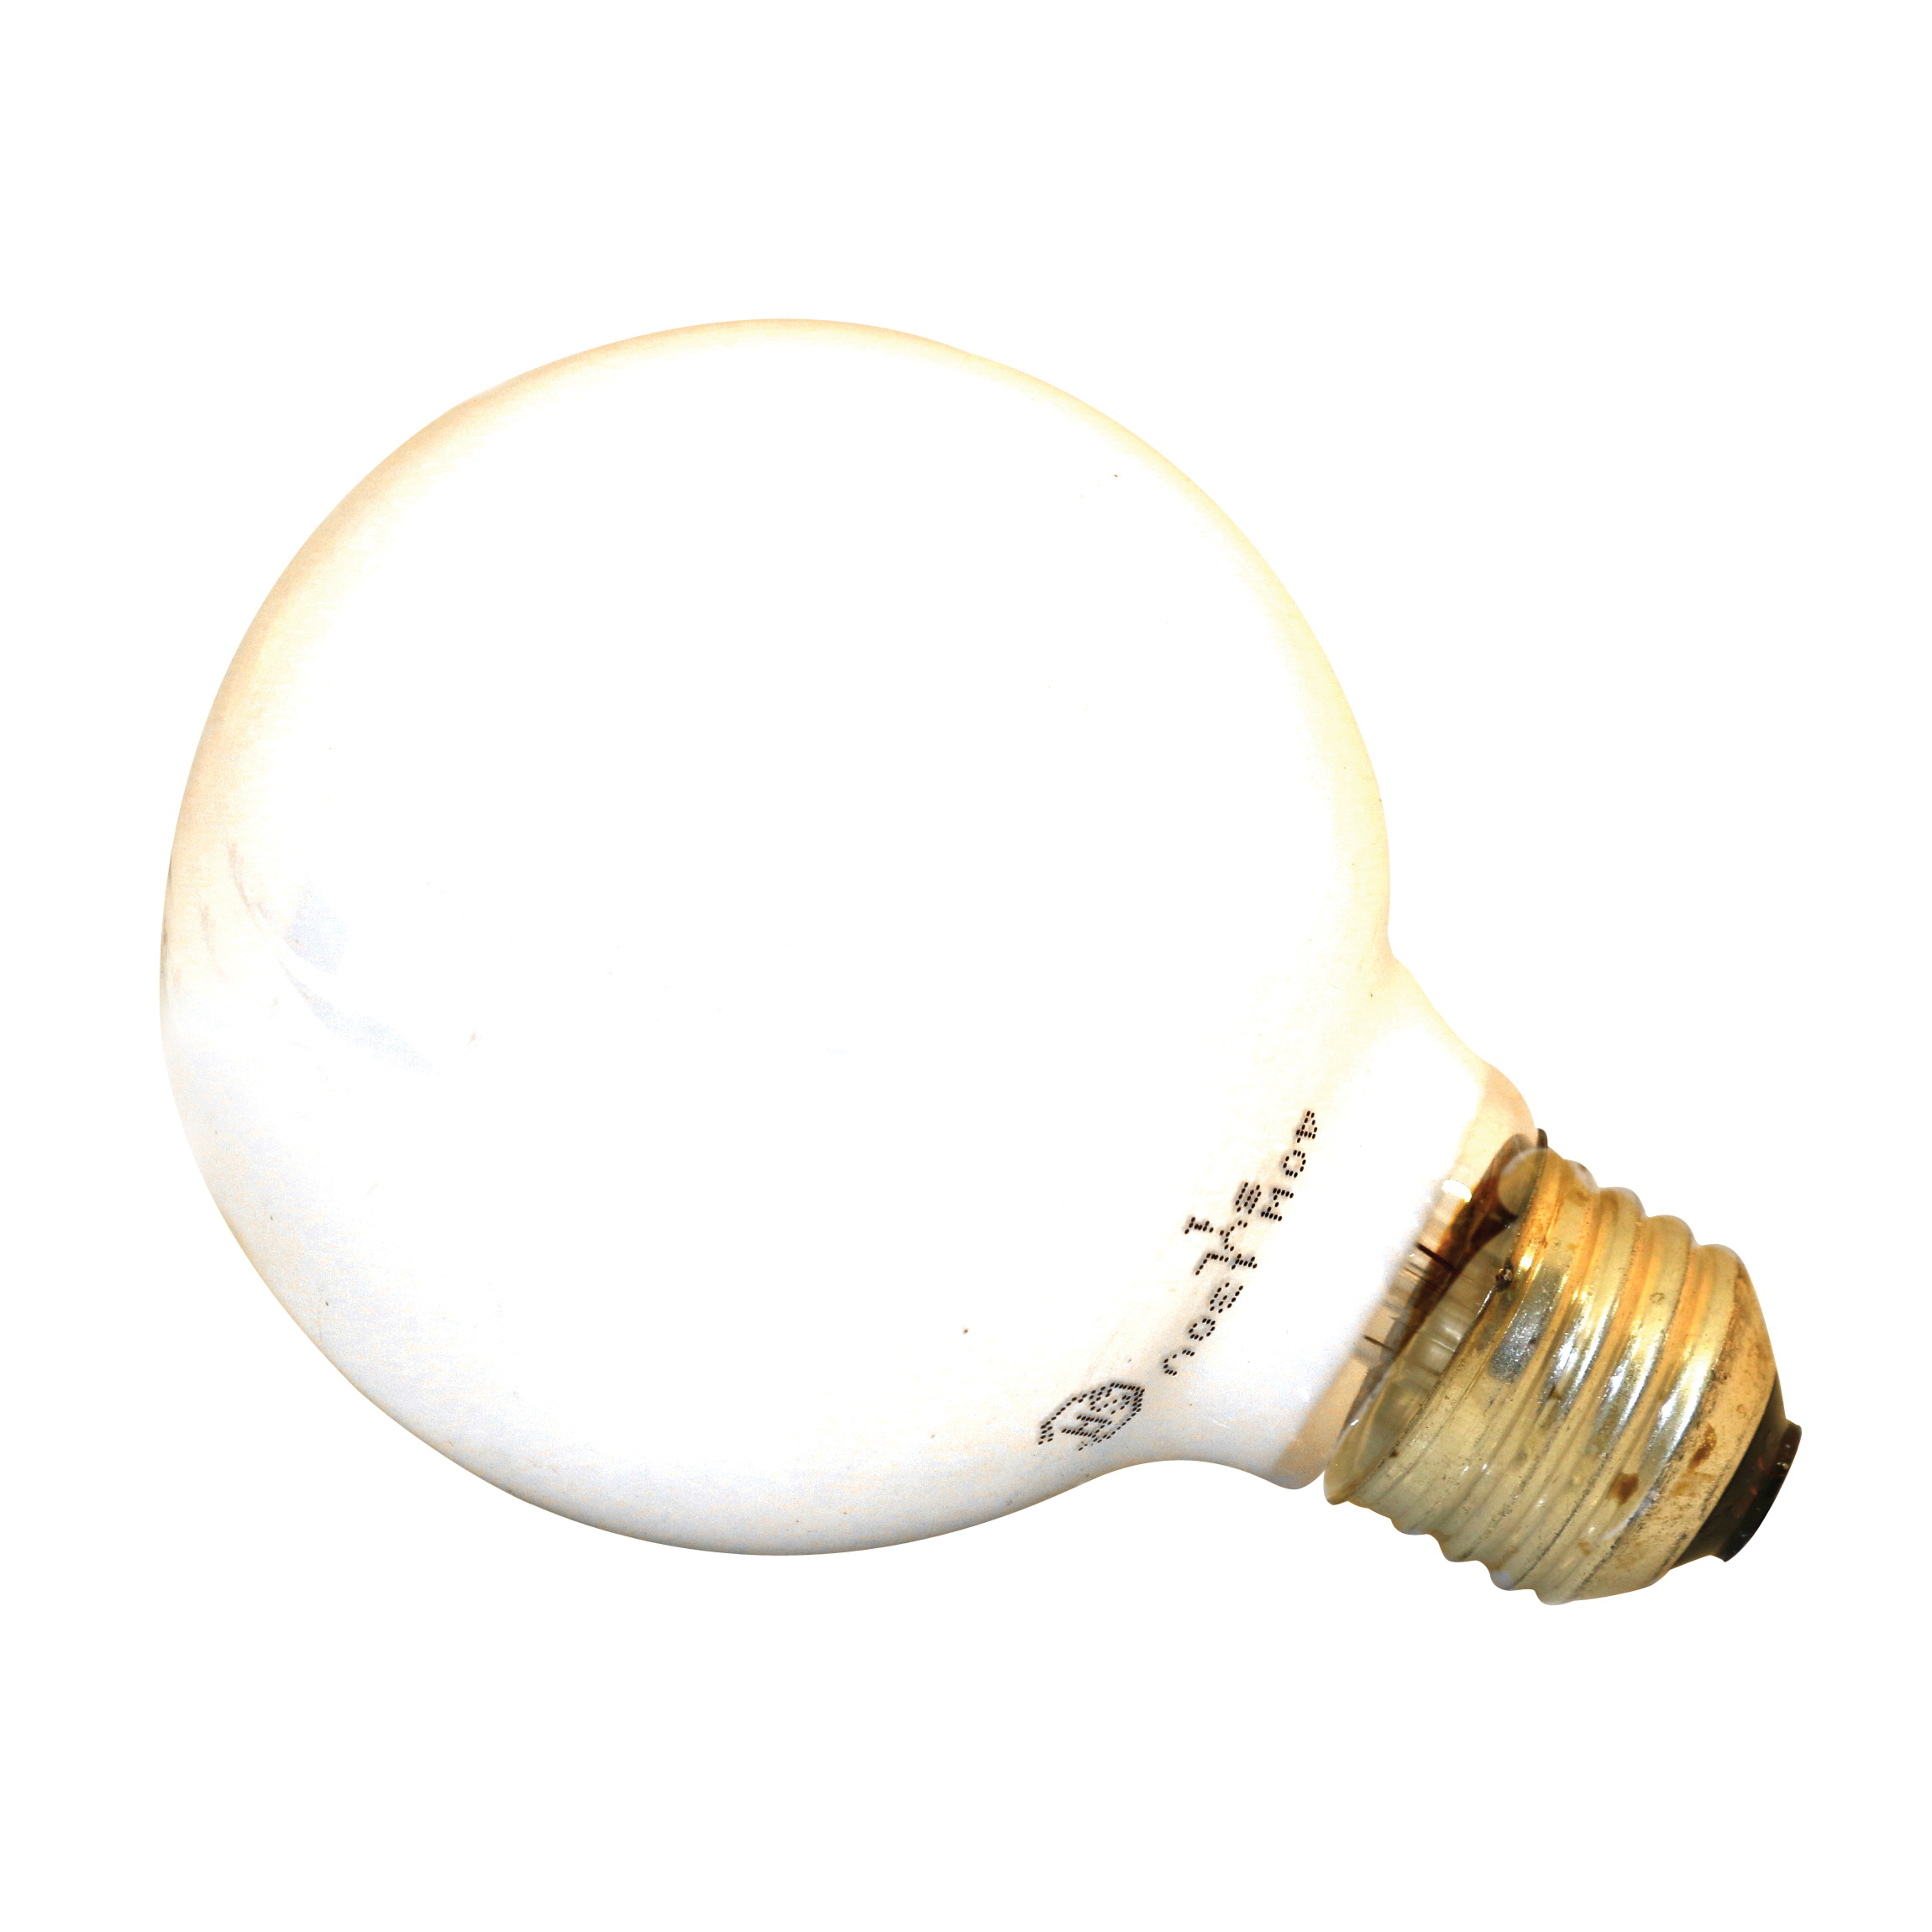 14190 Incandescent Lamp, 40 W, G25 Lamp, Medium E27 Lamp Base, 260 Lumens, 2850 K Color Temp, Soft White Light